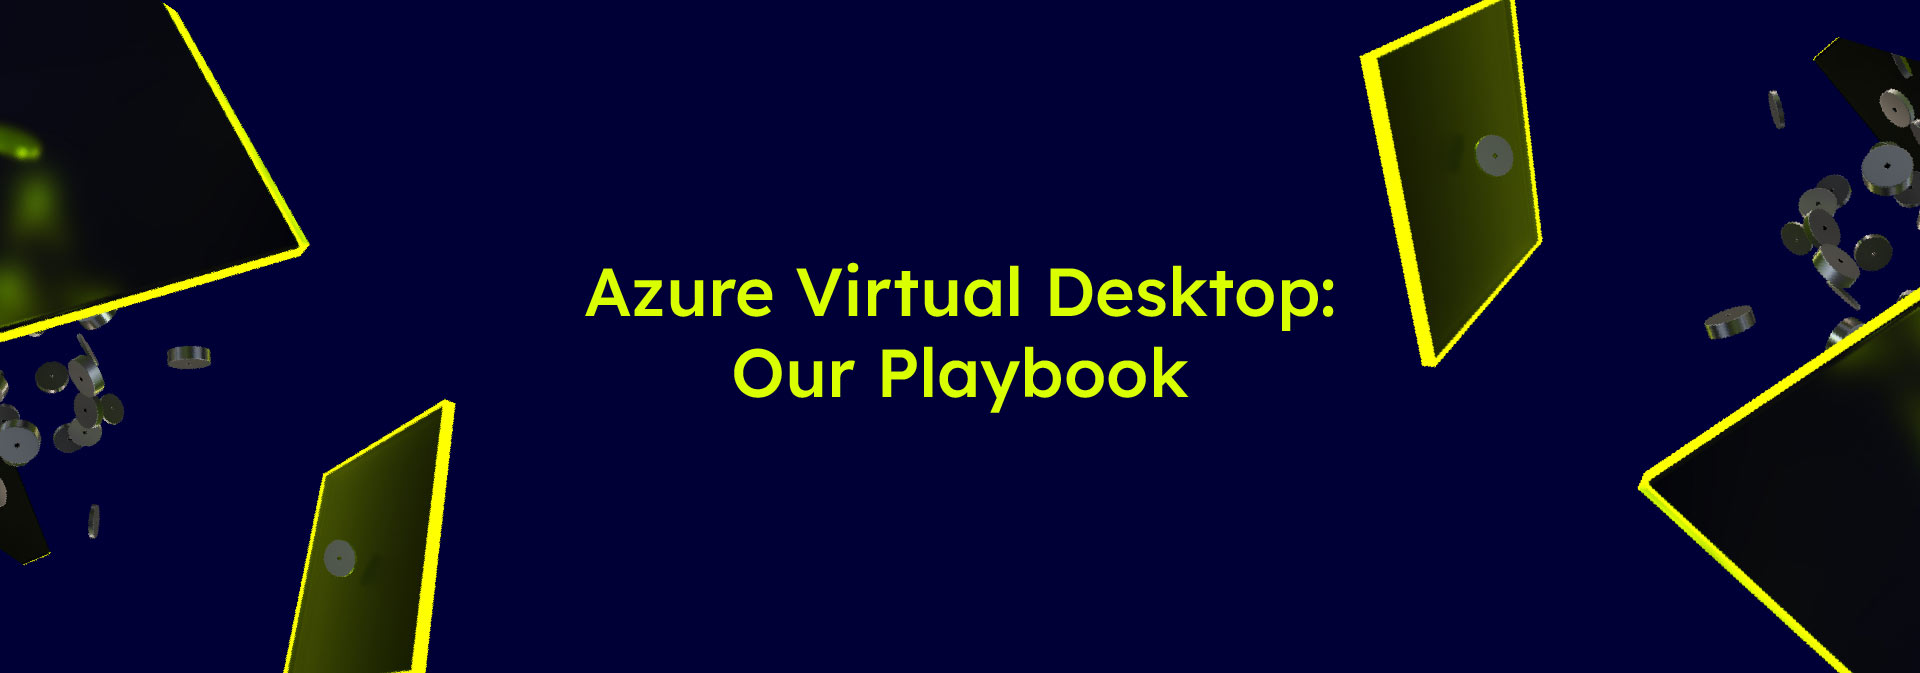 Azure Virtual Desktop - Our Playbook